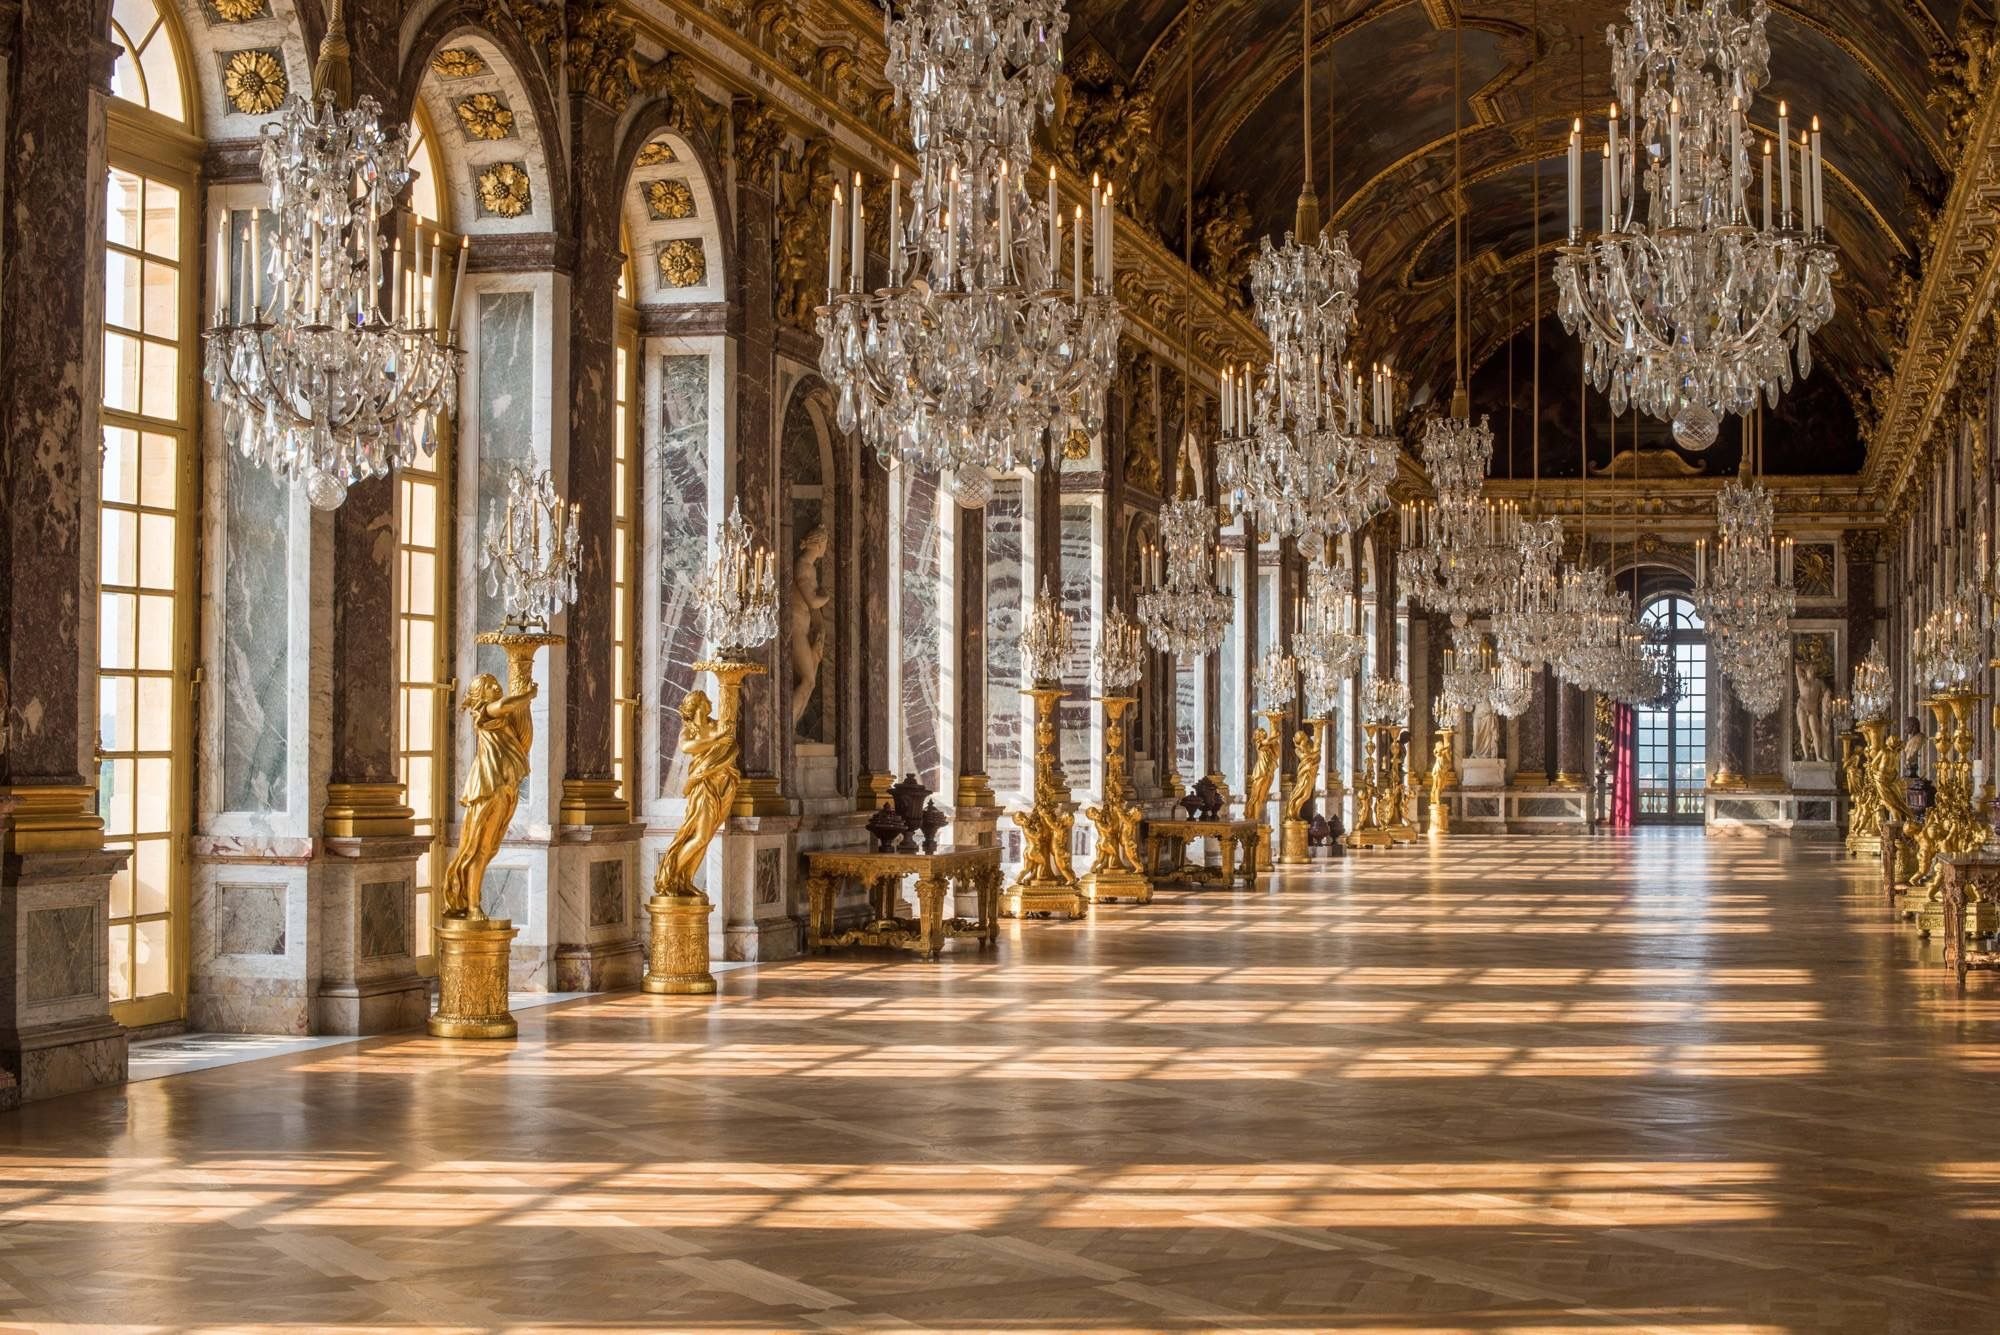 Chateau versailles. Версальский дворец, Версаль дворец Версаля. Зеркальная галерея Версальского дворца. Франция Версальский дворец внутри. Дворец Версаль Франция внутри.